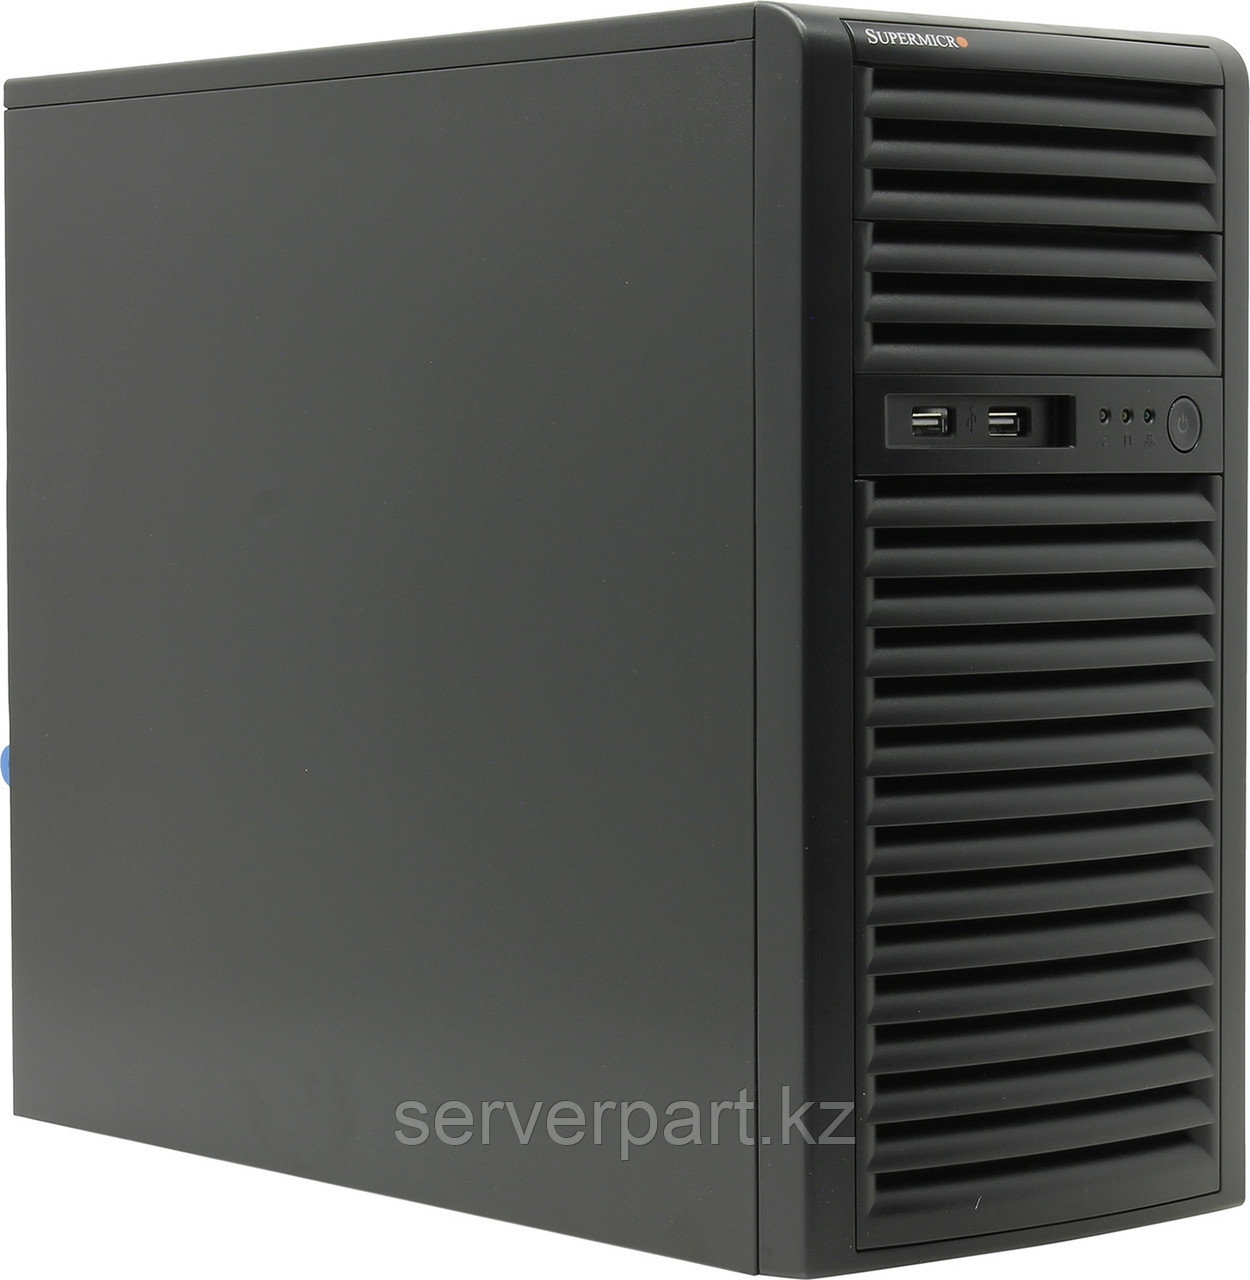 Сервер Supermicro SYS-5039D Tower 4LFF/4-core intel Xeon E3-1220v6 3GHz/16GB EUDIMM/2x480GB SSD RI Hyb, фото 1